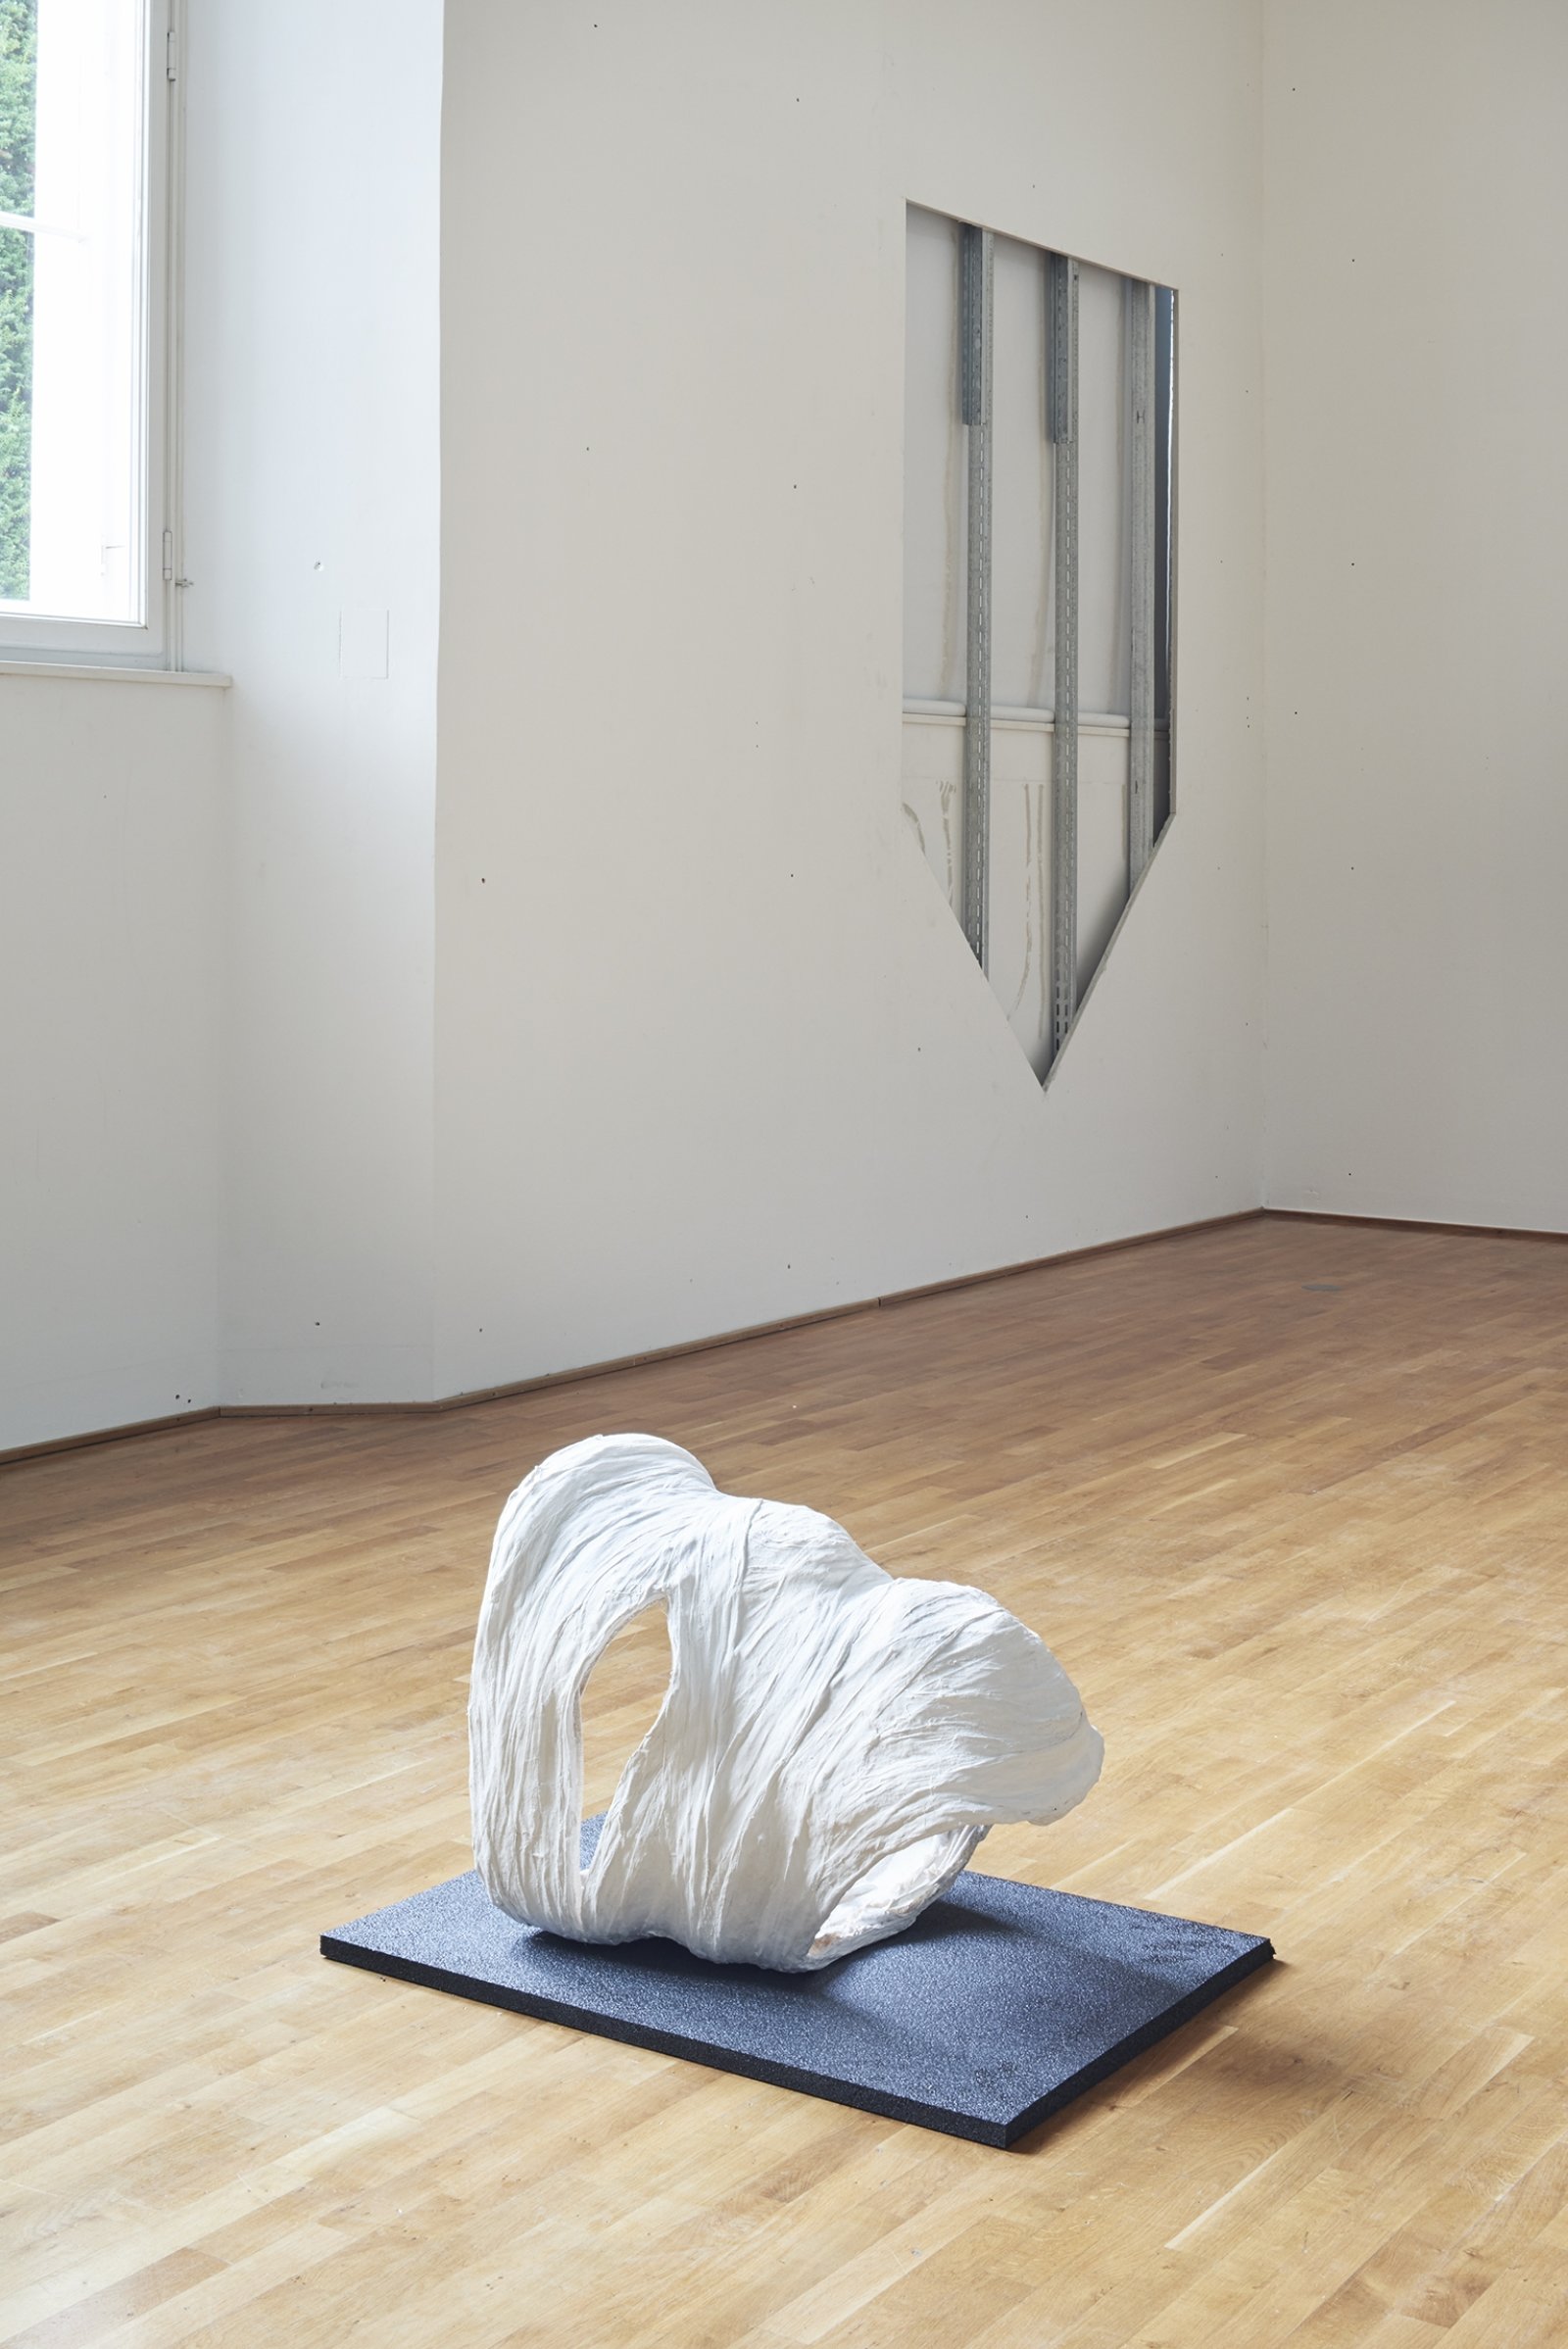 Abbas Akhavan, If the first metaphor was animal, 2017, cotton elastic bandage, plaster, fiberglass, foam, 25 x 22 x 31 in. (63 x 56 x 78 cm). Installation view, Museum Villa Stuck, Munich, Germany, 2017